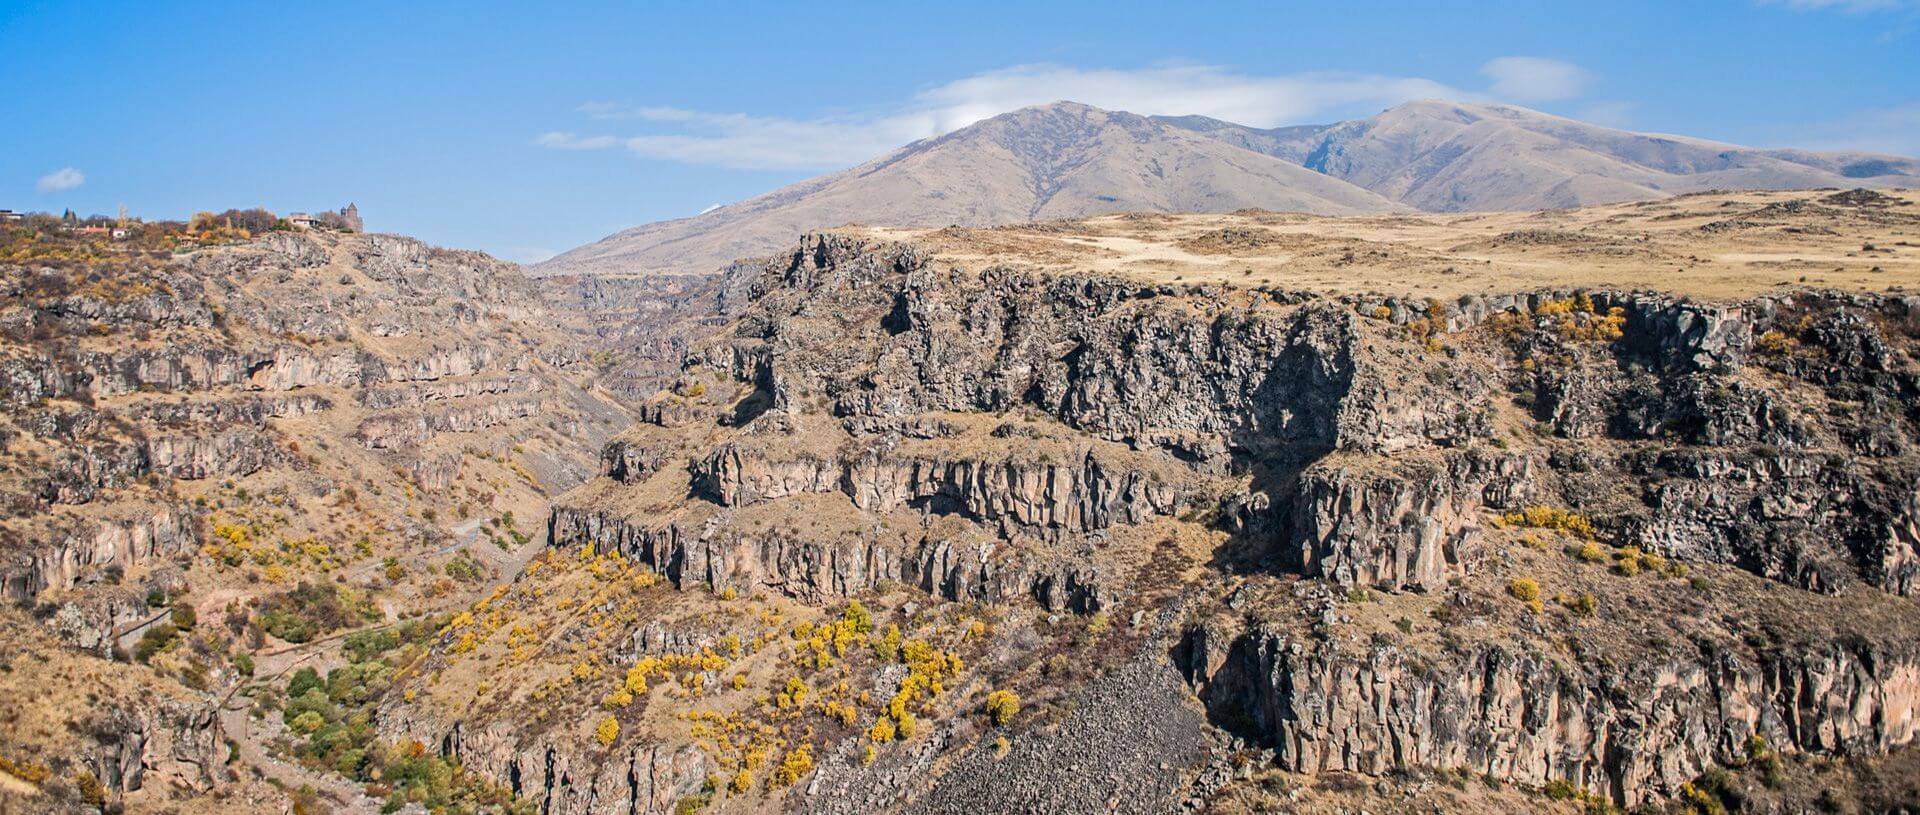 Mount Ara and Kasagh canyon. Weekend tour in Armenia.